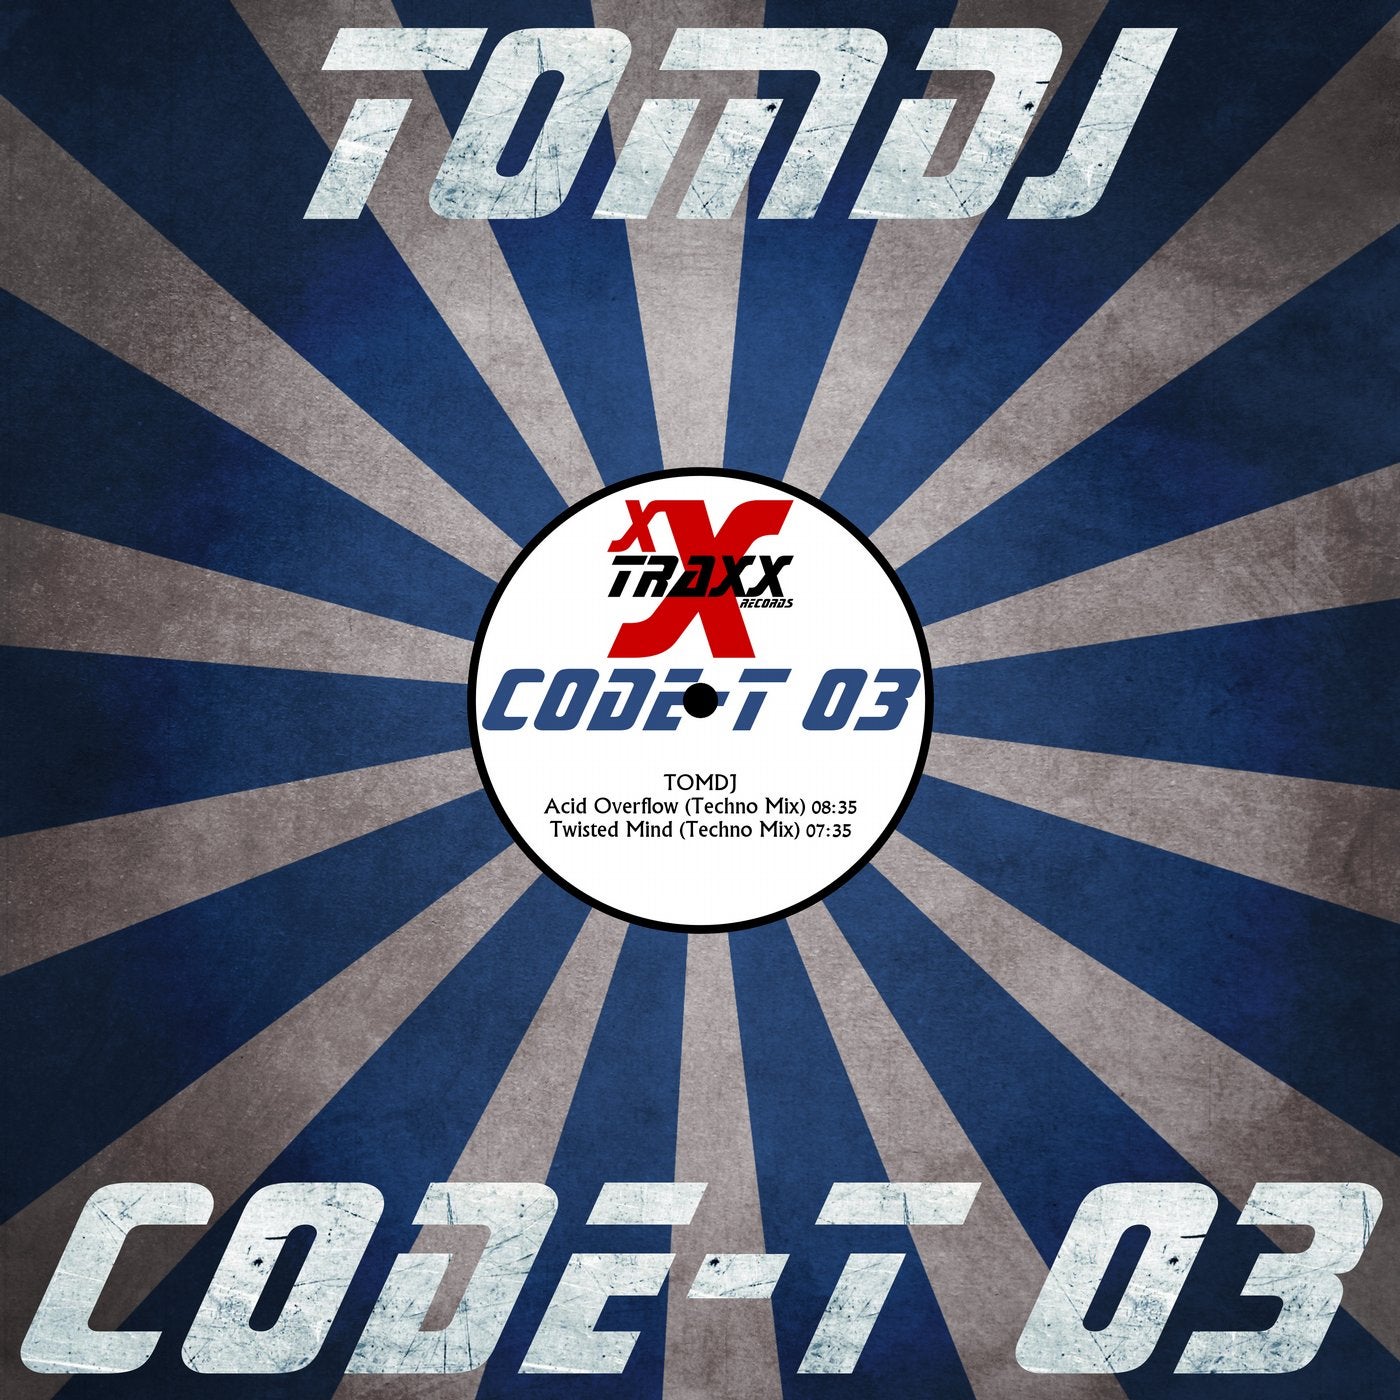 Code-T 03